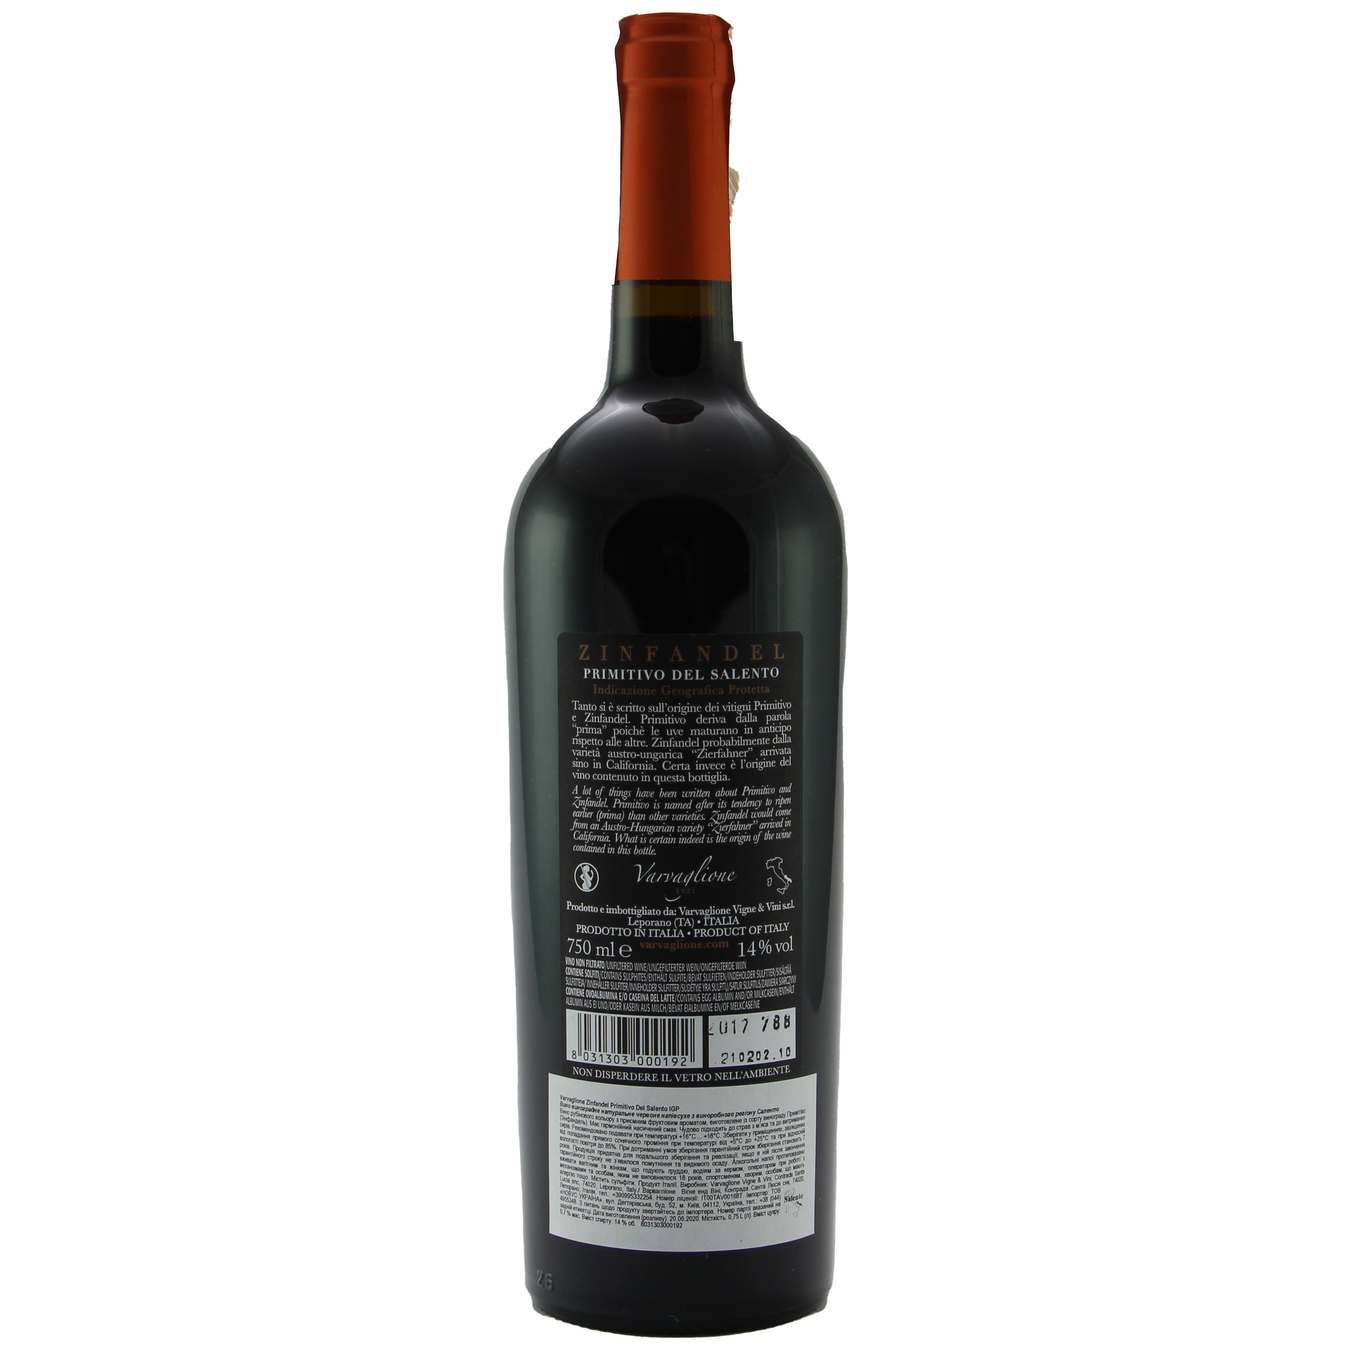 Вино Varvaglione Zinfandel Primitivo del Salento IGP червоне напівсухе 14% 0.75л 2